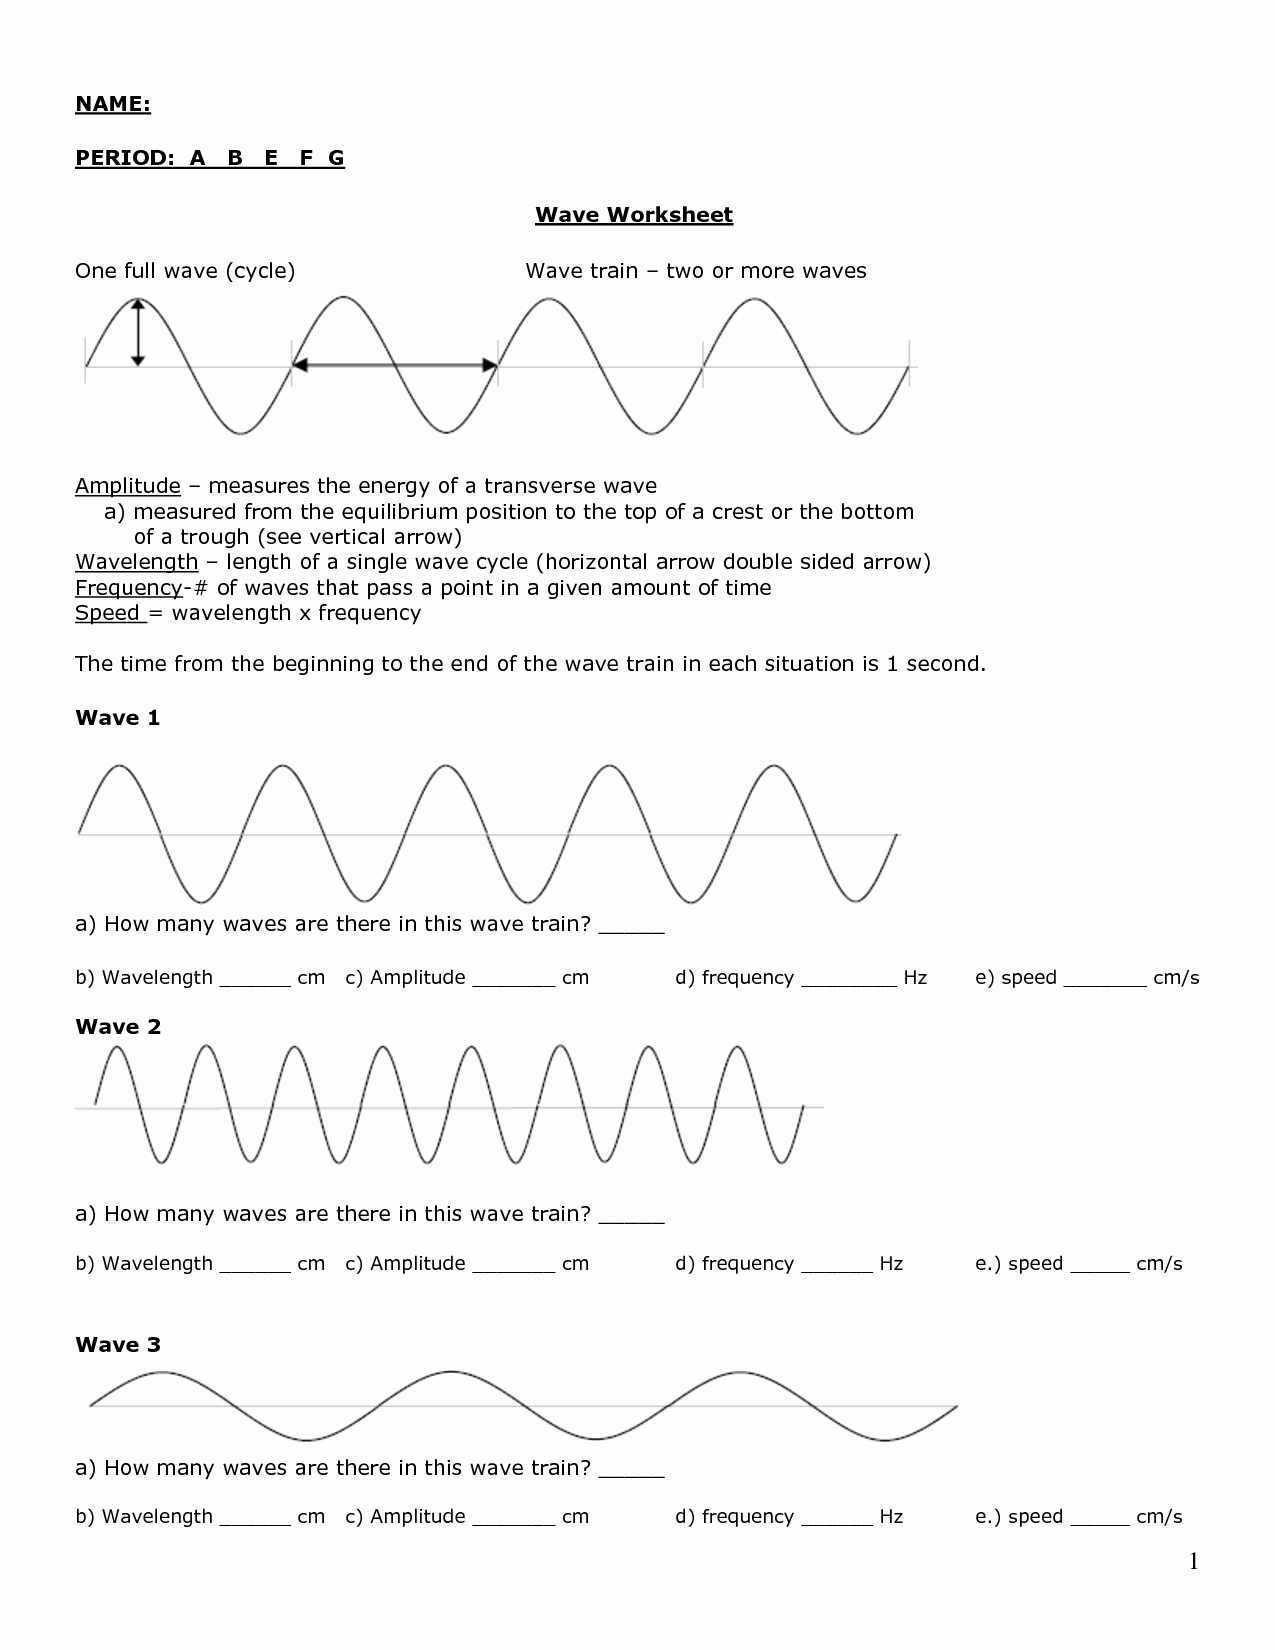 Wave Worksheet Answer Key Lovely 8 Best Of Light and sound Waves Worksheets